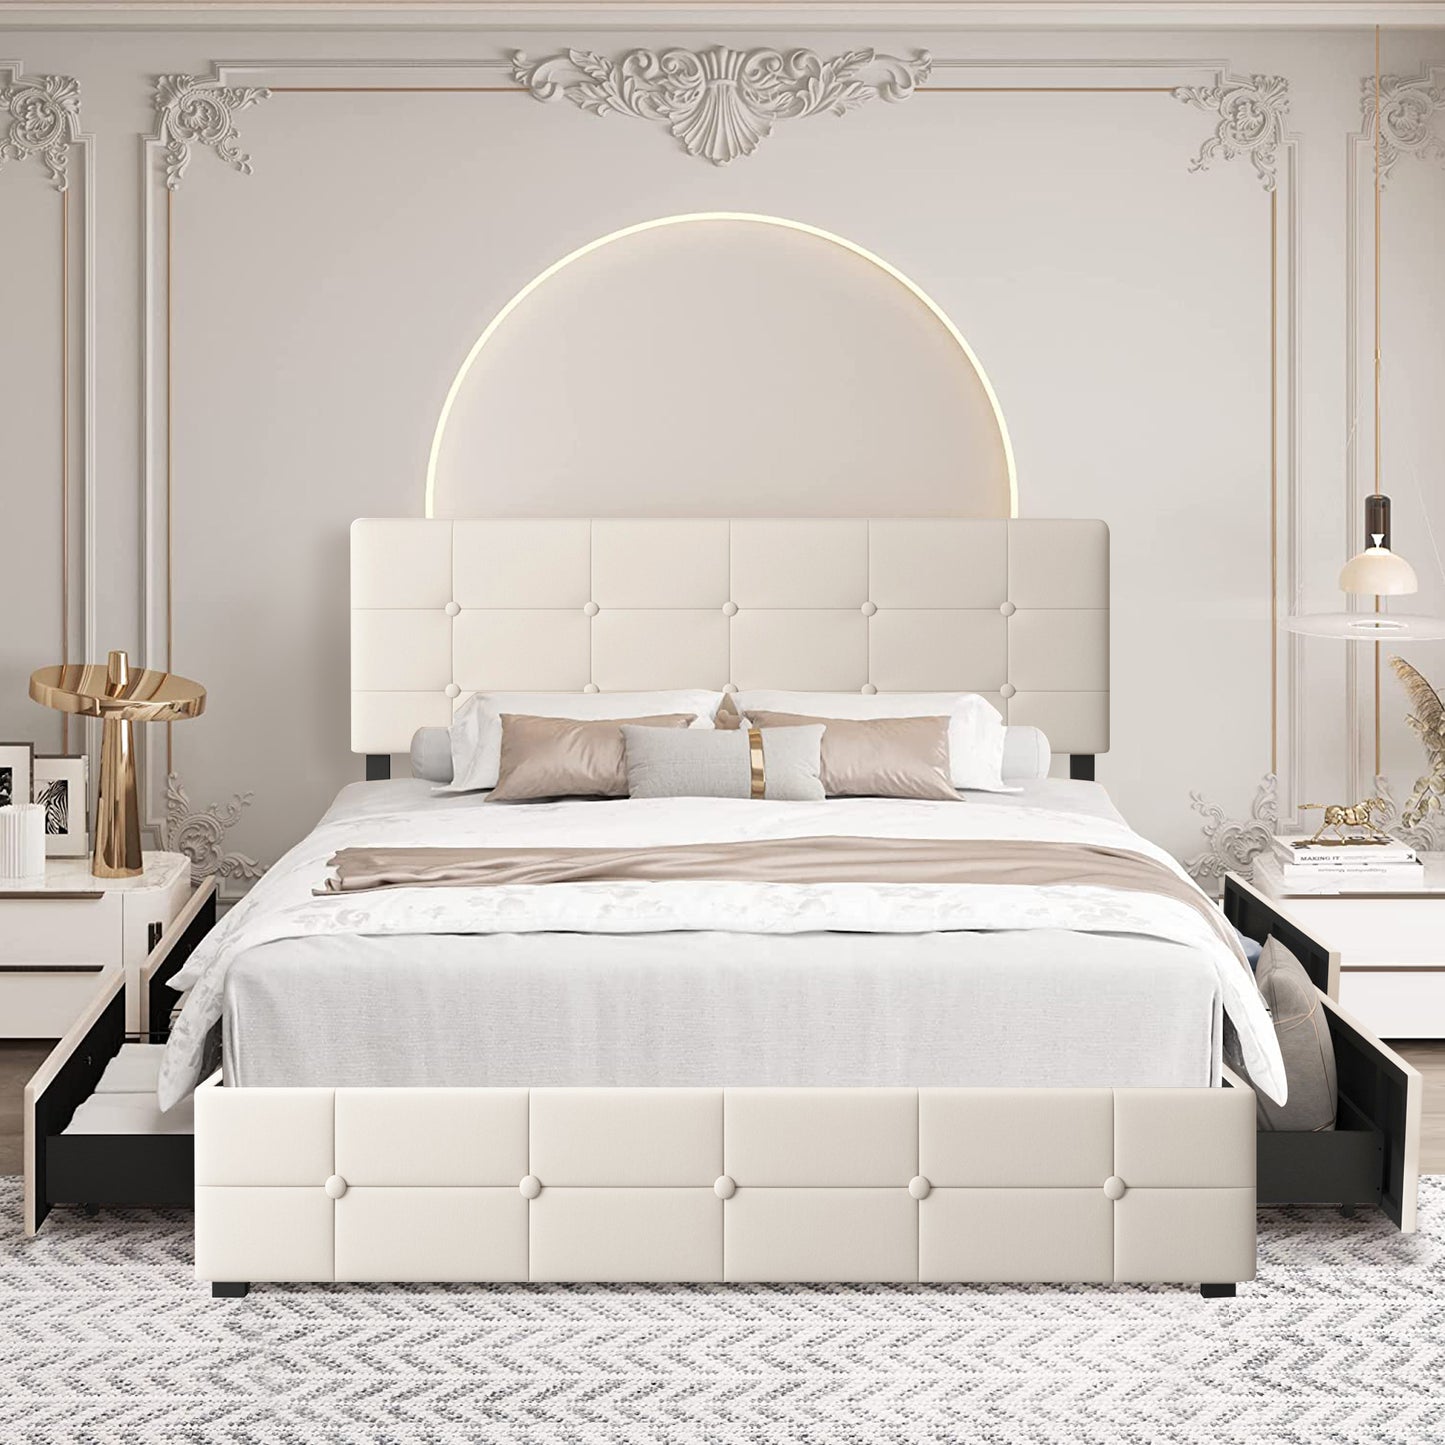 SYNGAR Queen Size Platform Bed Frame with 4 Drawers, Modern Button Tufted Velvet Upholstered, Adjustable Headboard, Beige